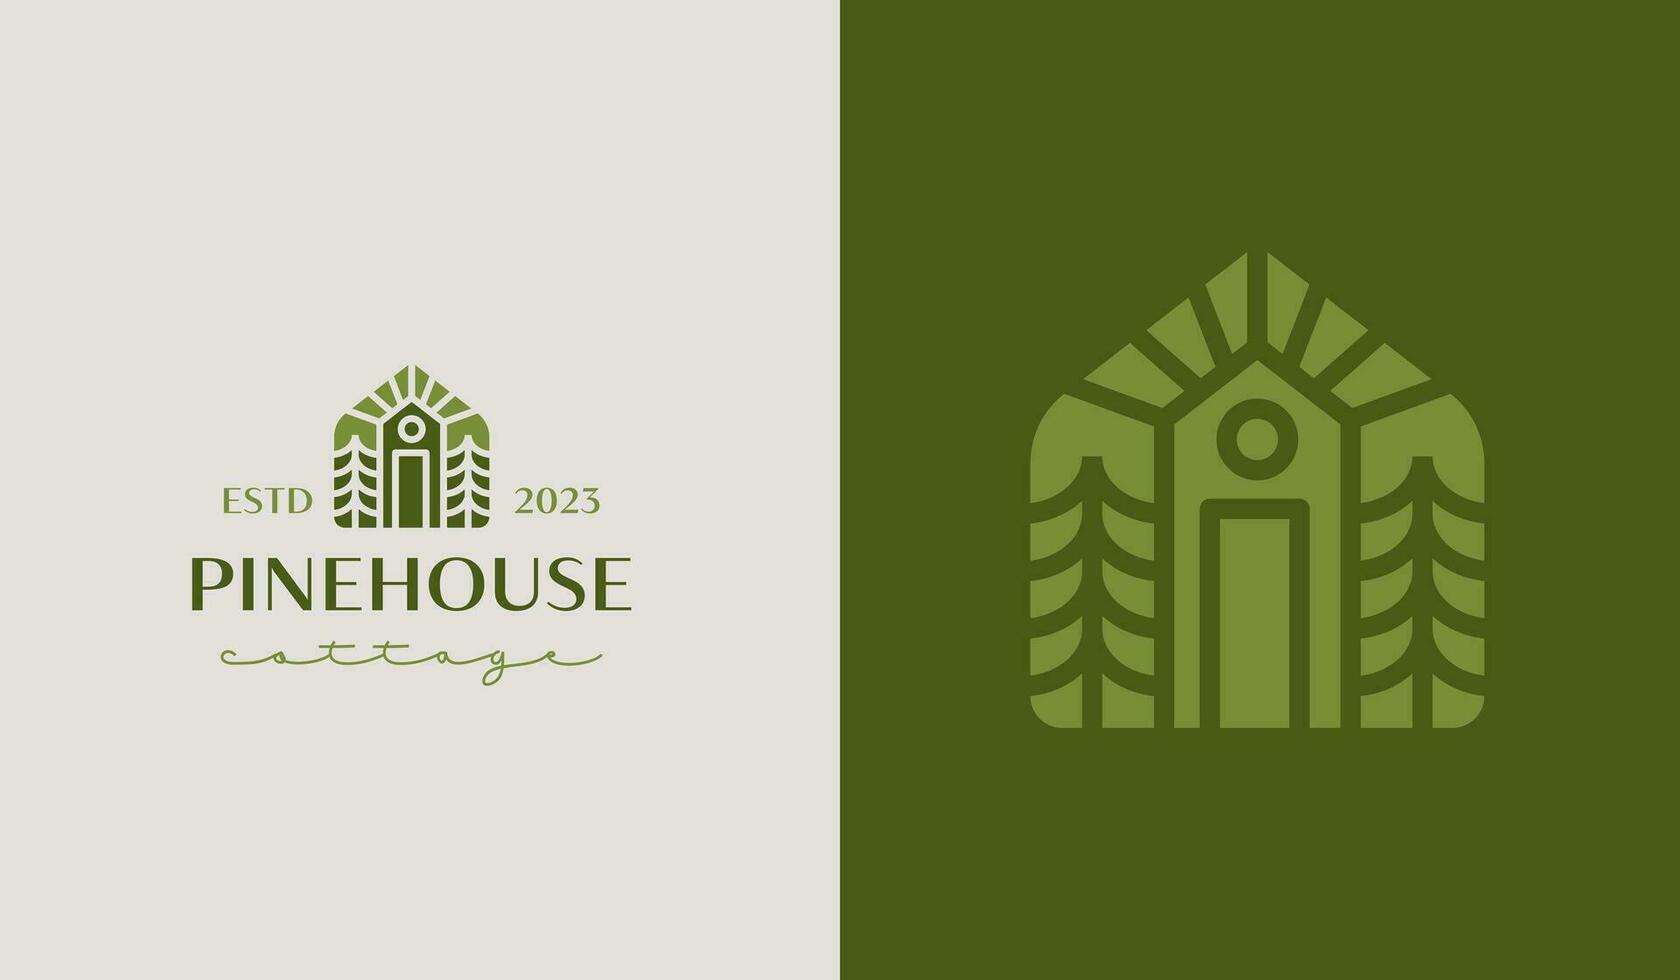 Cottage Pine House Logo Template. Universal creative premium symbol. Vector illustration. Creative Minimal design template. Symbol for Corporate Business Identity